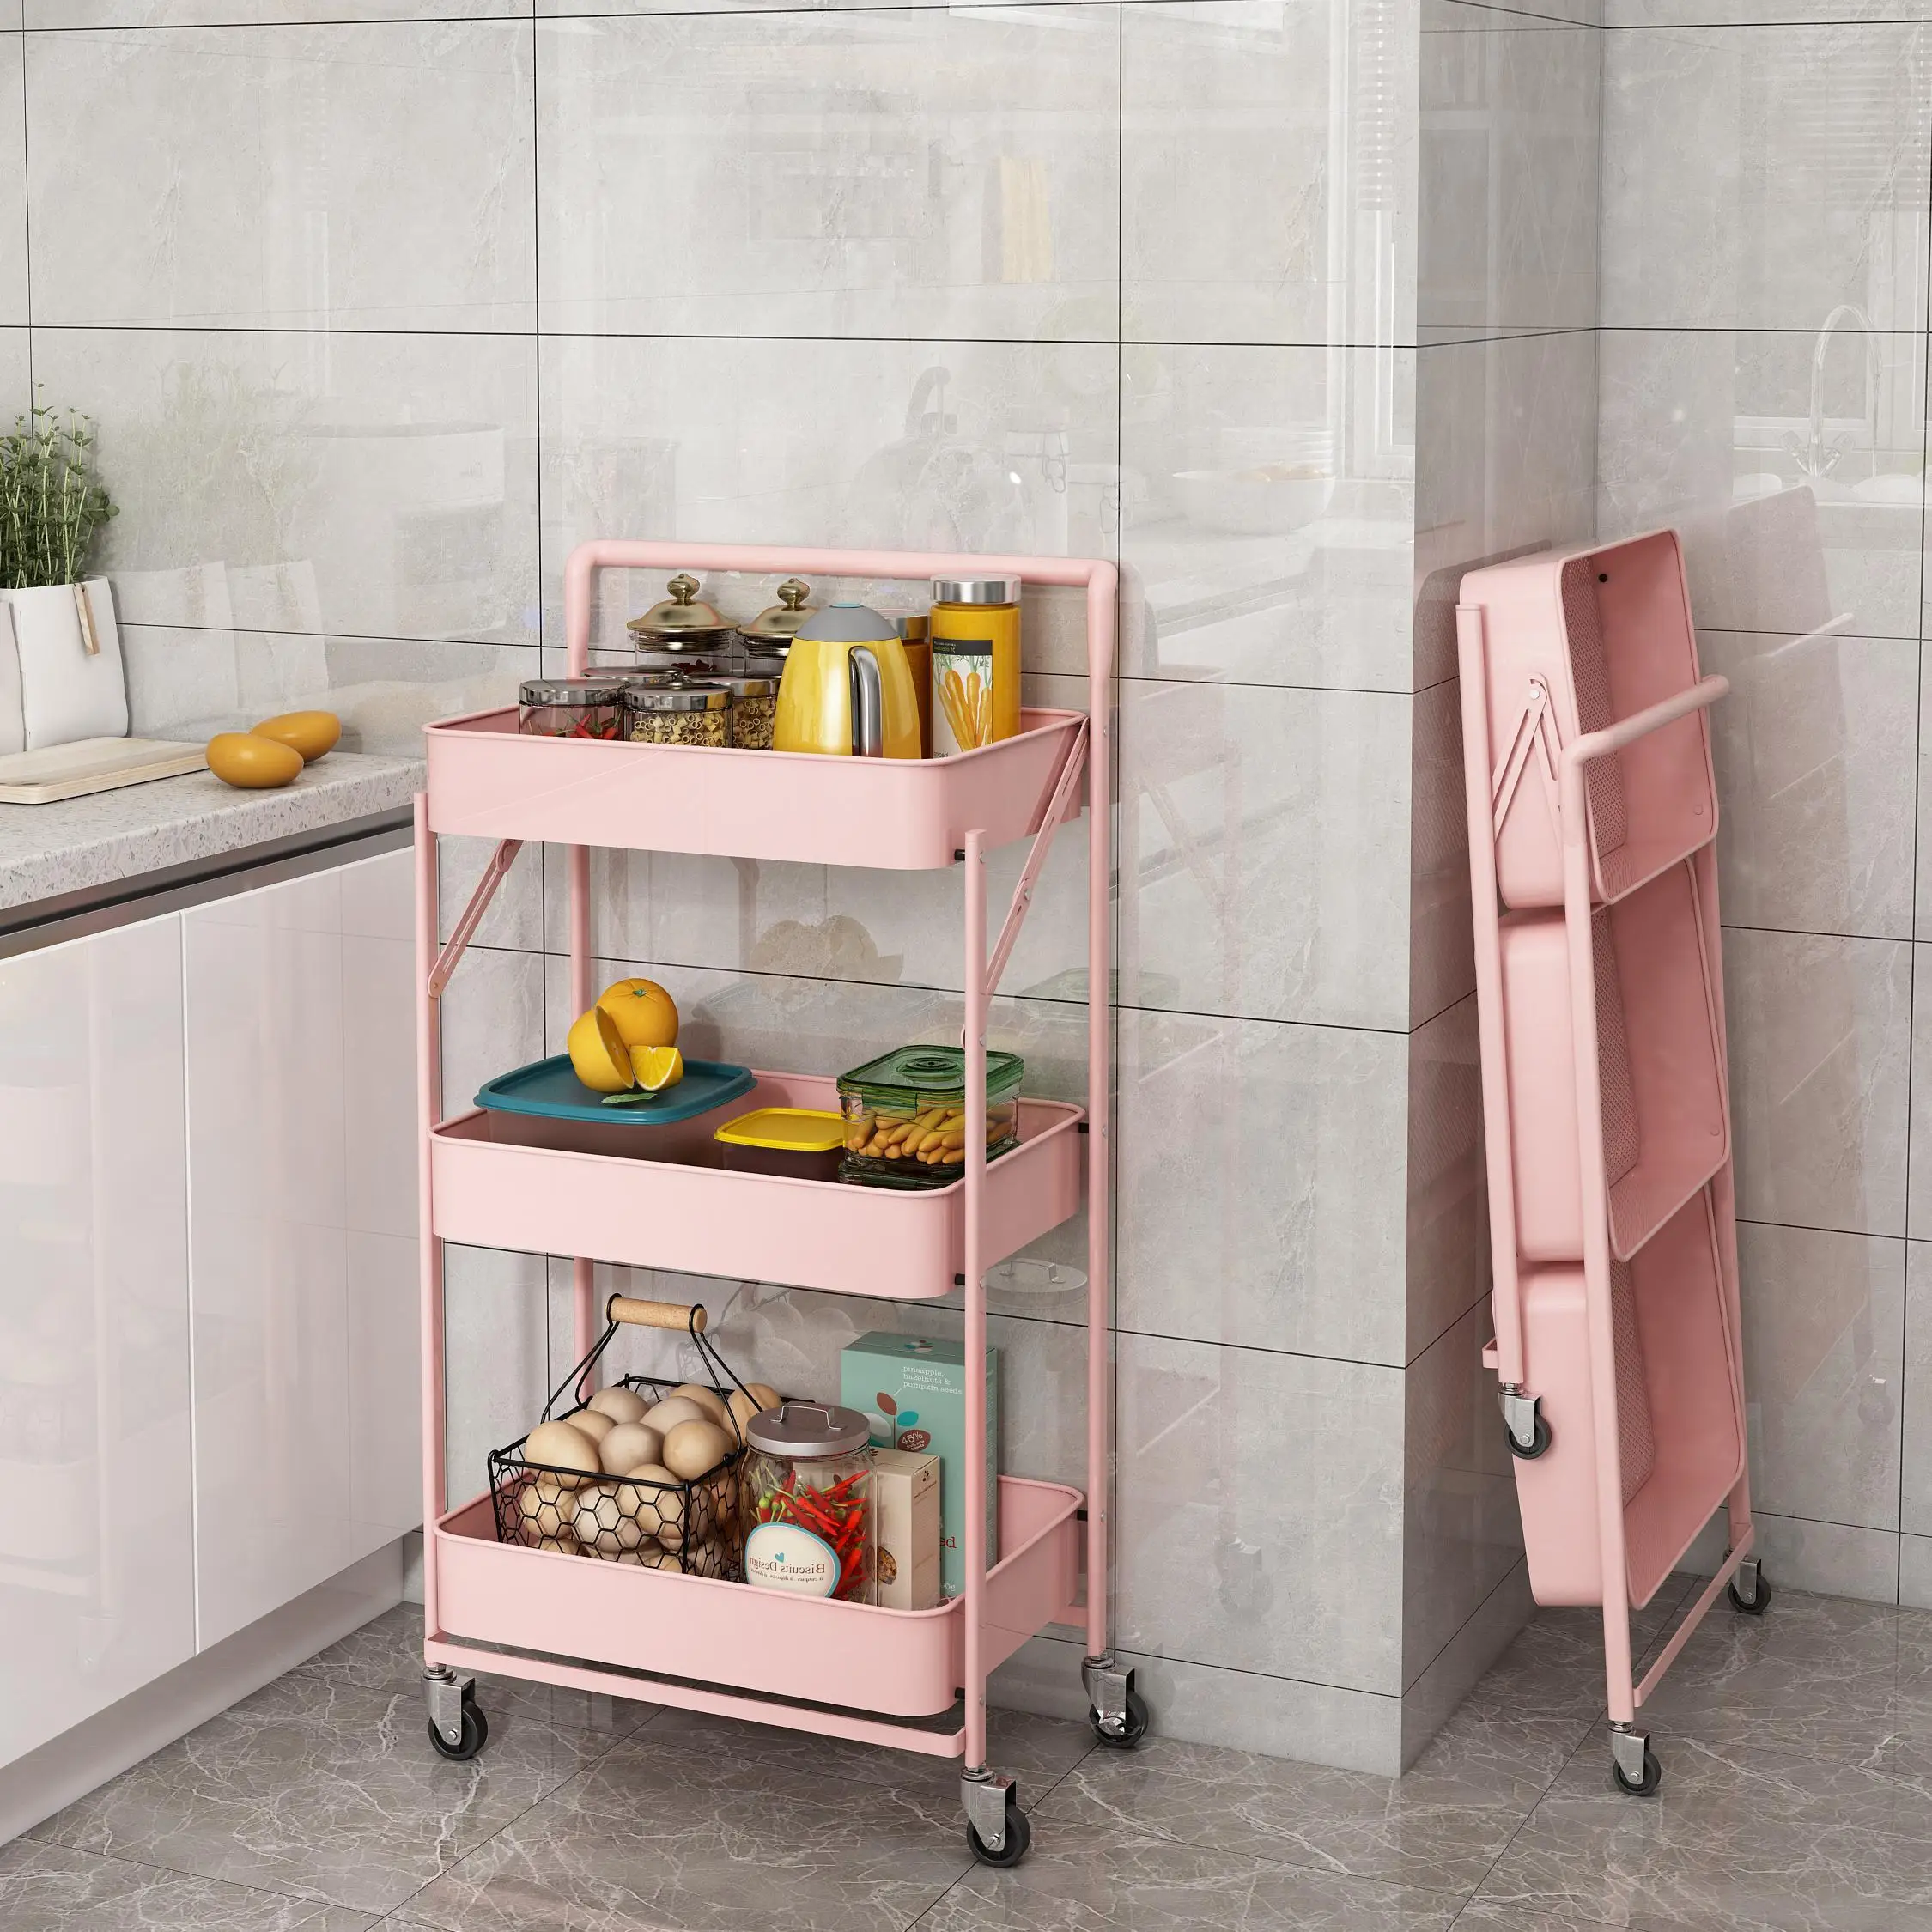 

Household Multi-function Trolley Cart 3-tier Kitchen Storage Rack, White,black,pink